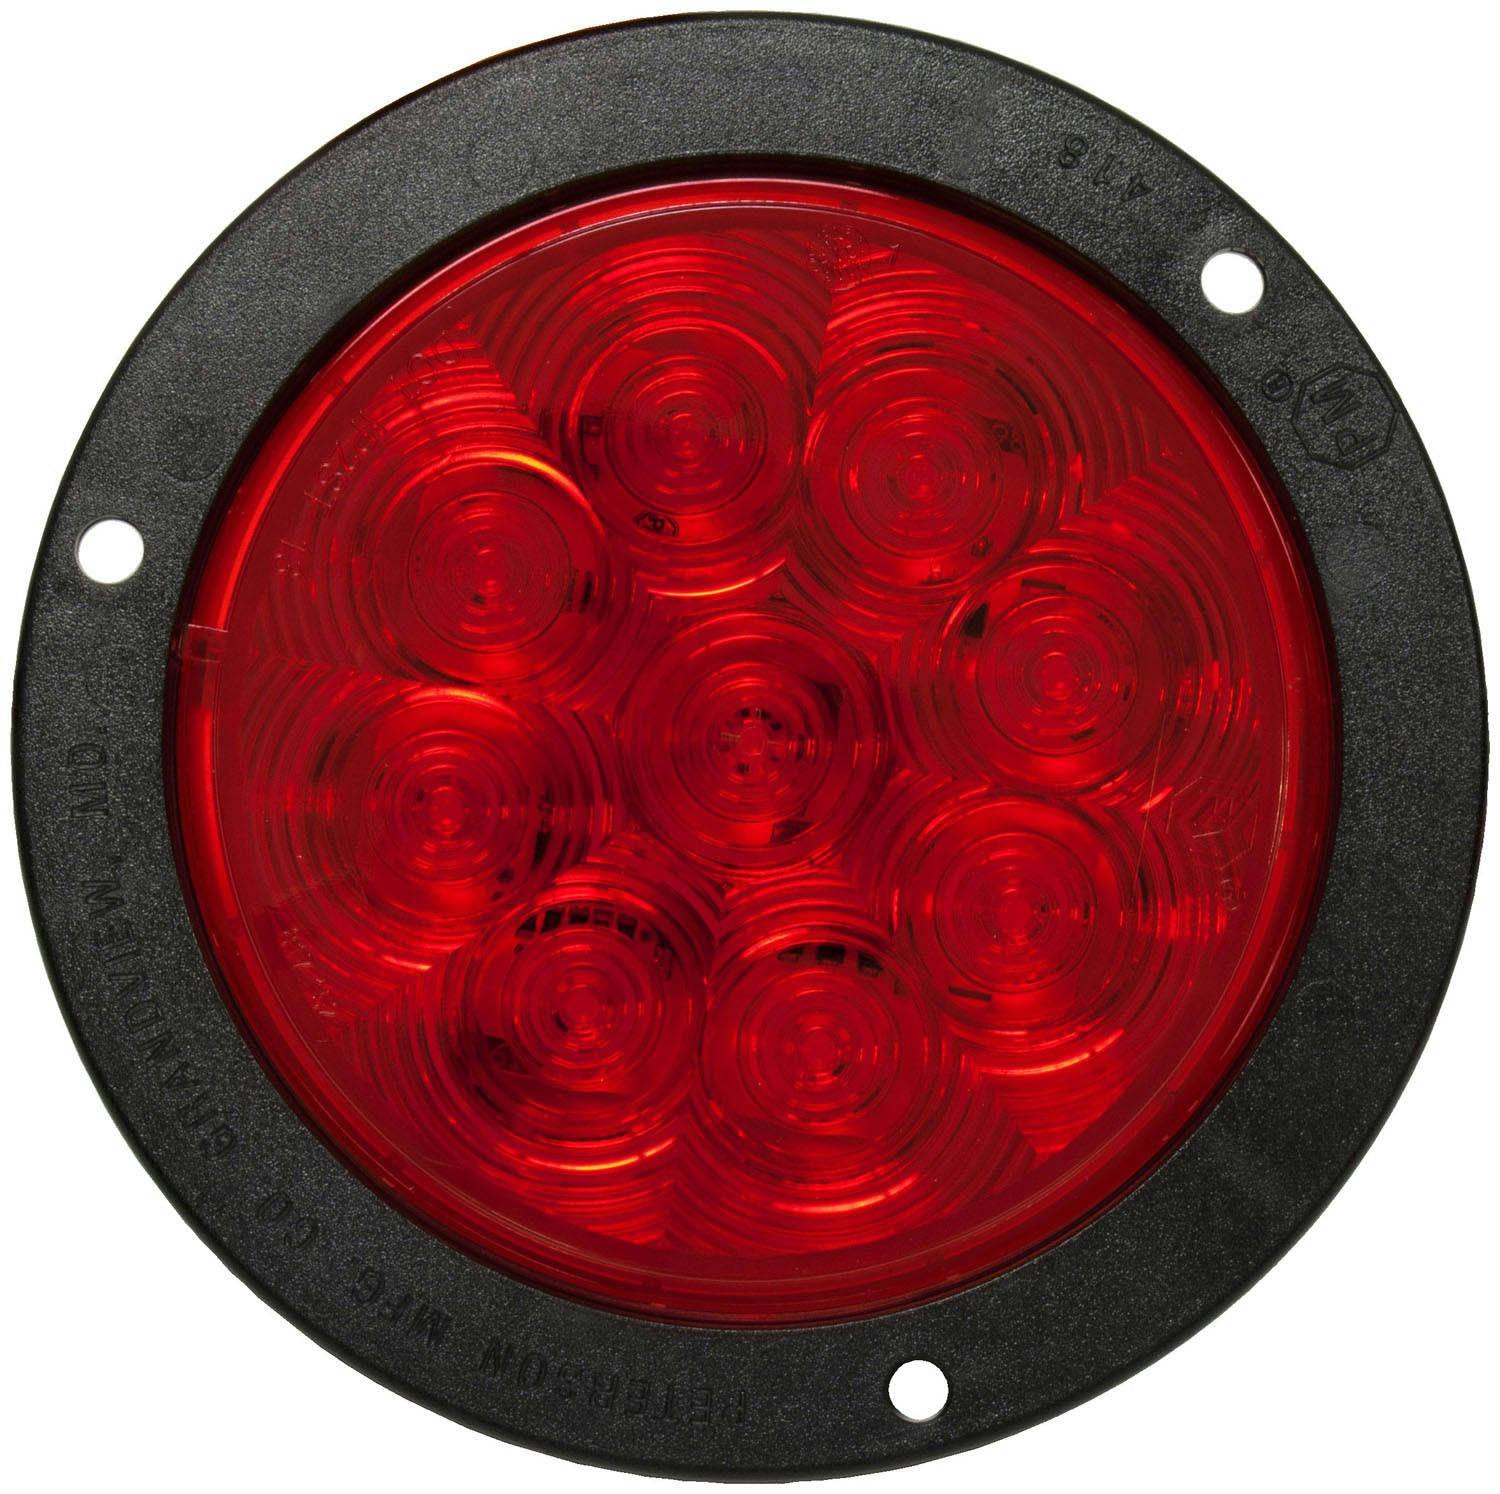 LED Stop/Turn/Tail, Round, AMP, Flange-Mount 4", Multi-volt, red, bulk pack (Pack of 50)